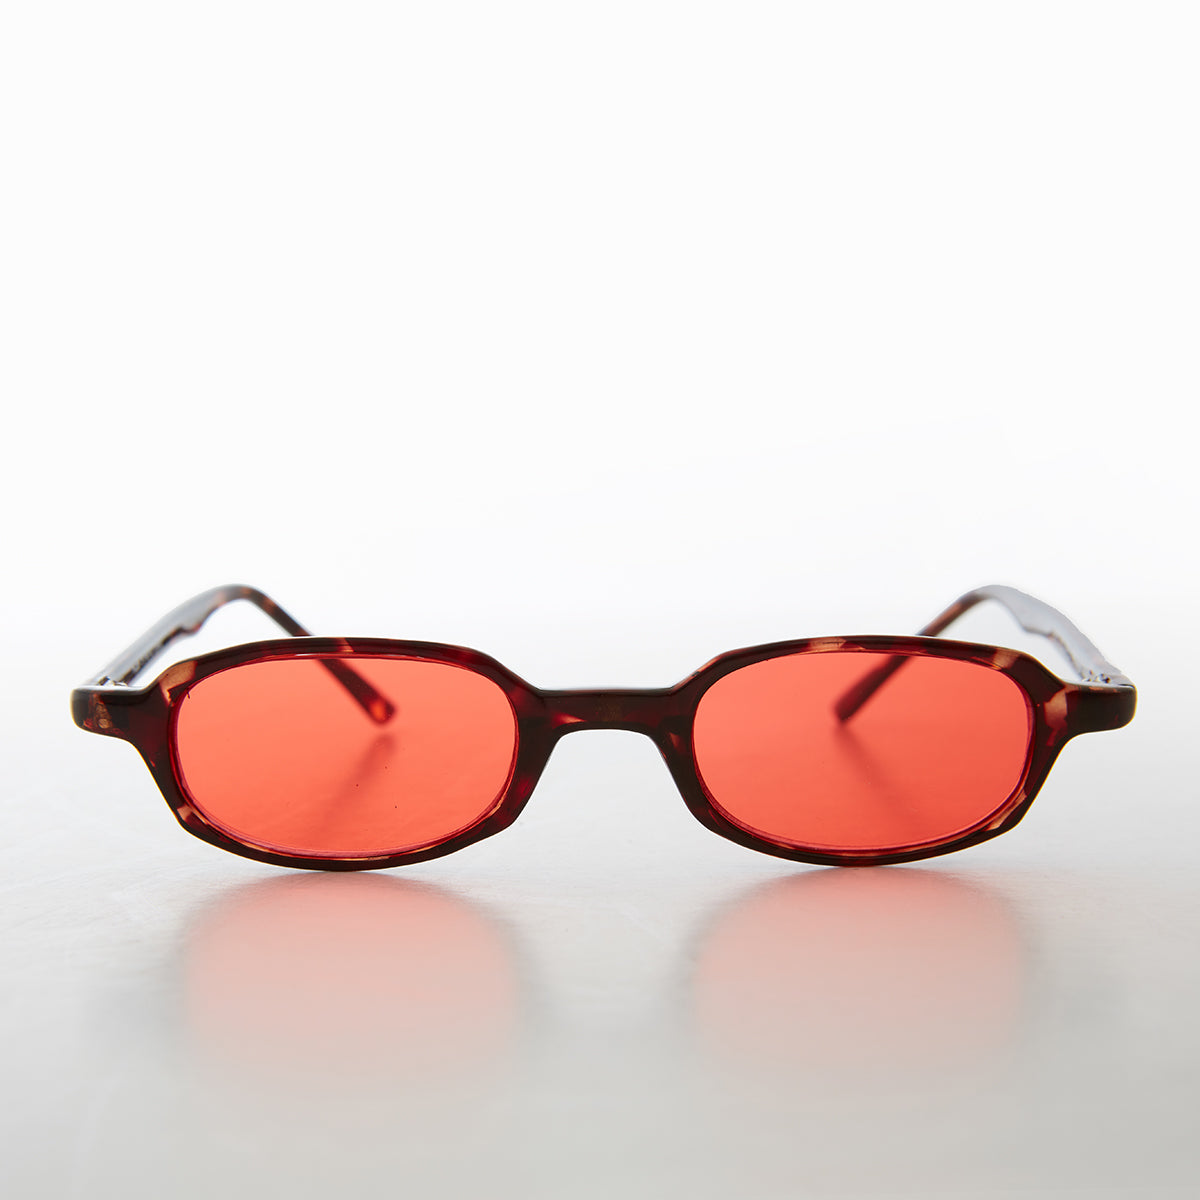 Micro Rectangle Tortoiseshell Sunglasses with Tinted Lenses 